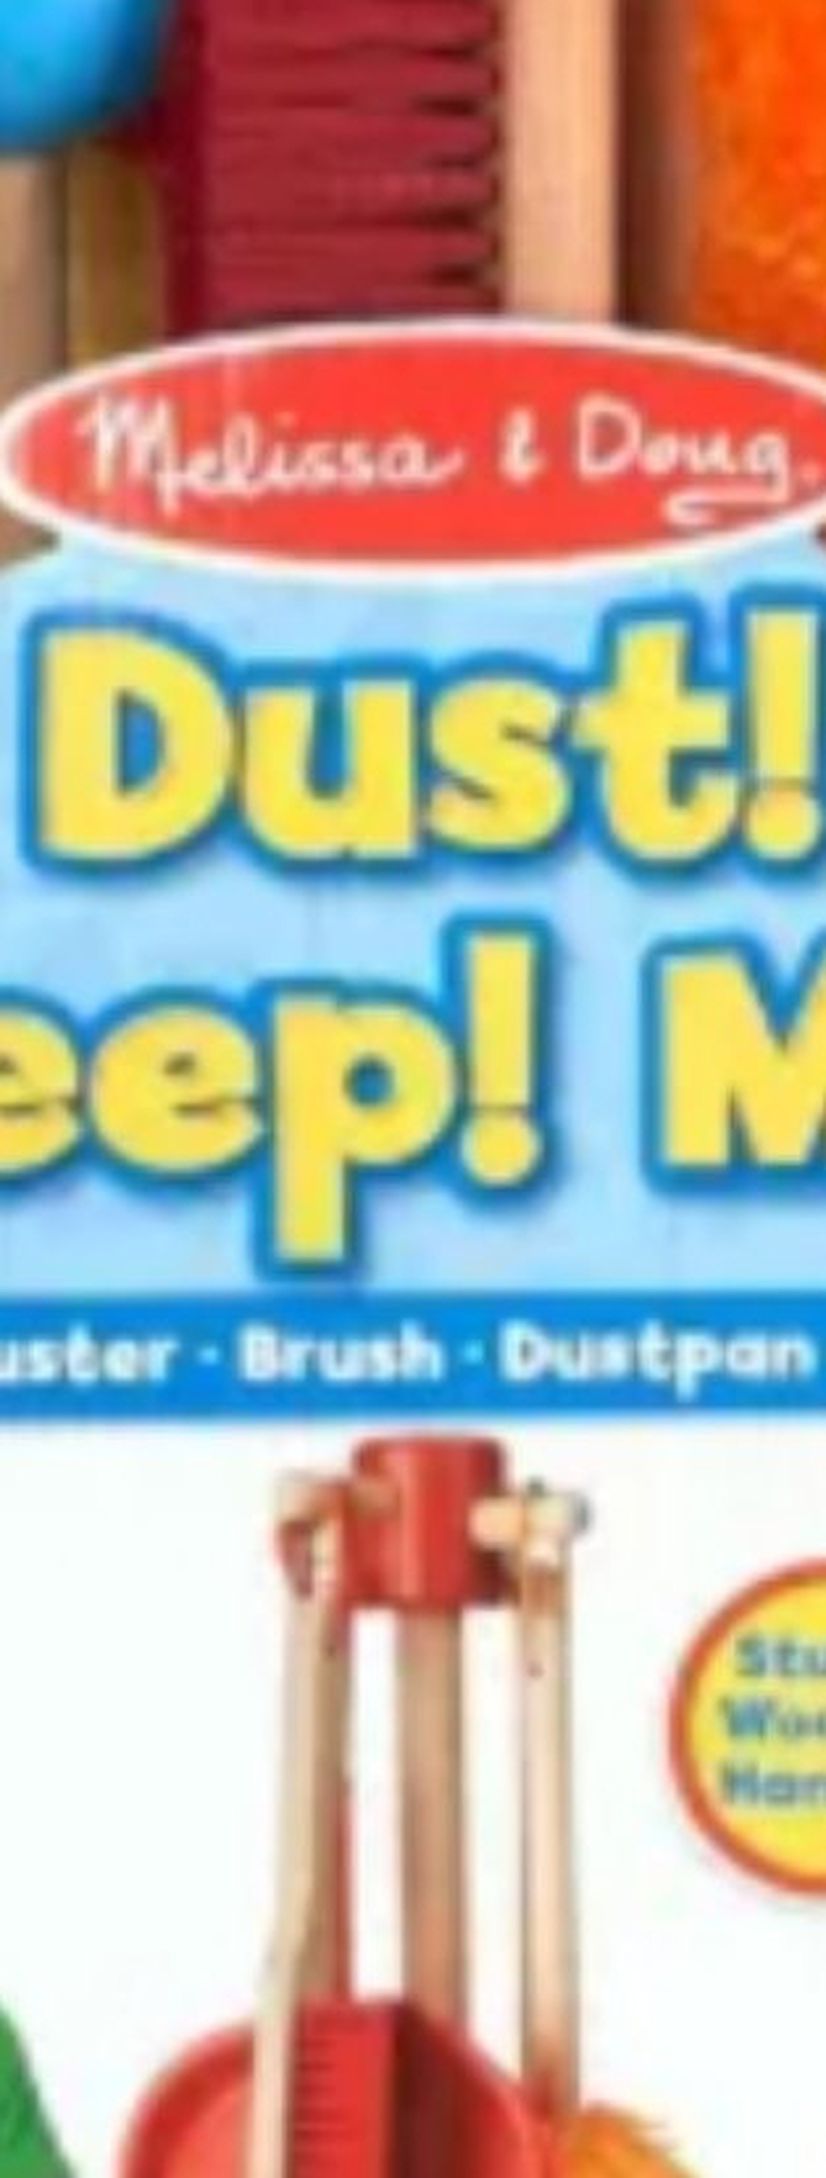 New Melissa & Doug Dust, Sweep, & Mop Set!